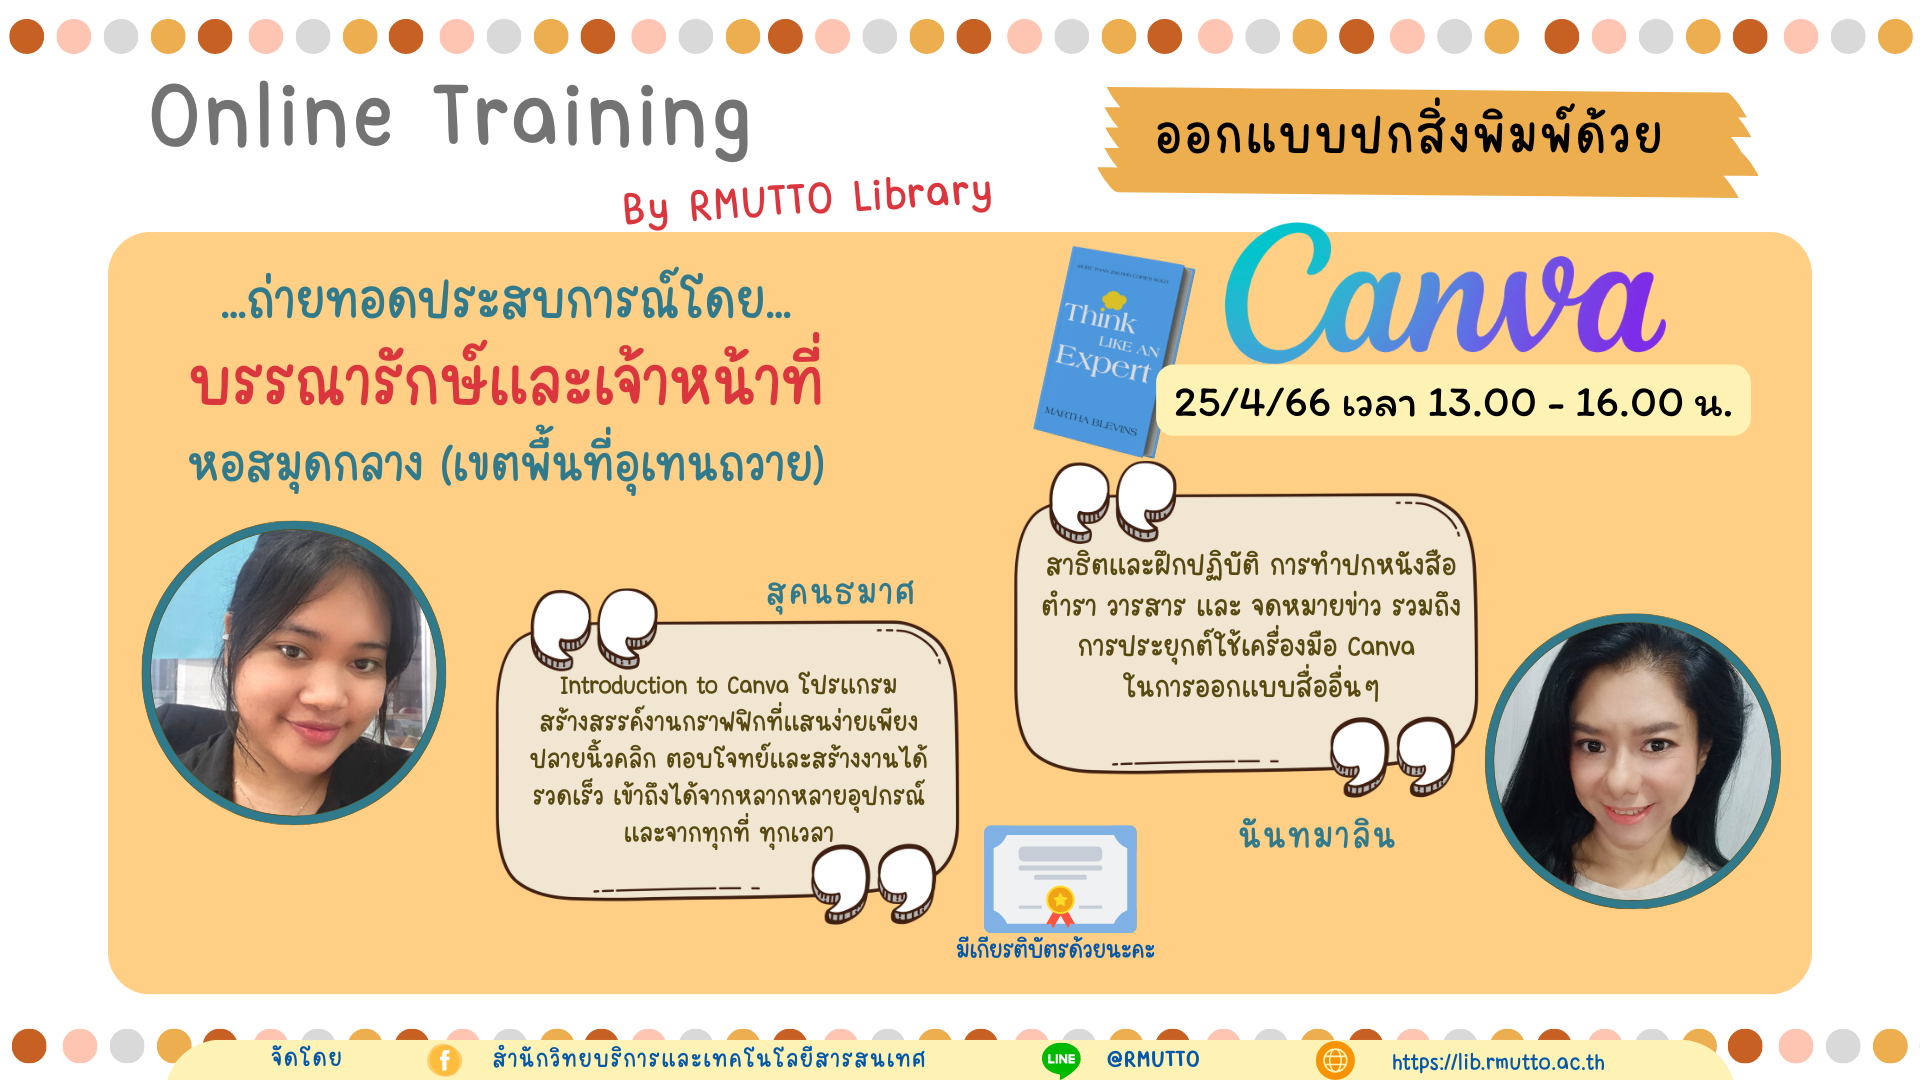 Online Training by RMUTTO Library หัวข้อ “ออกแบบปกสิ่งพิมพ์ด้วย Canva “